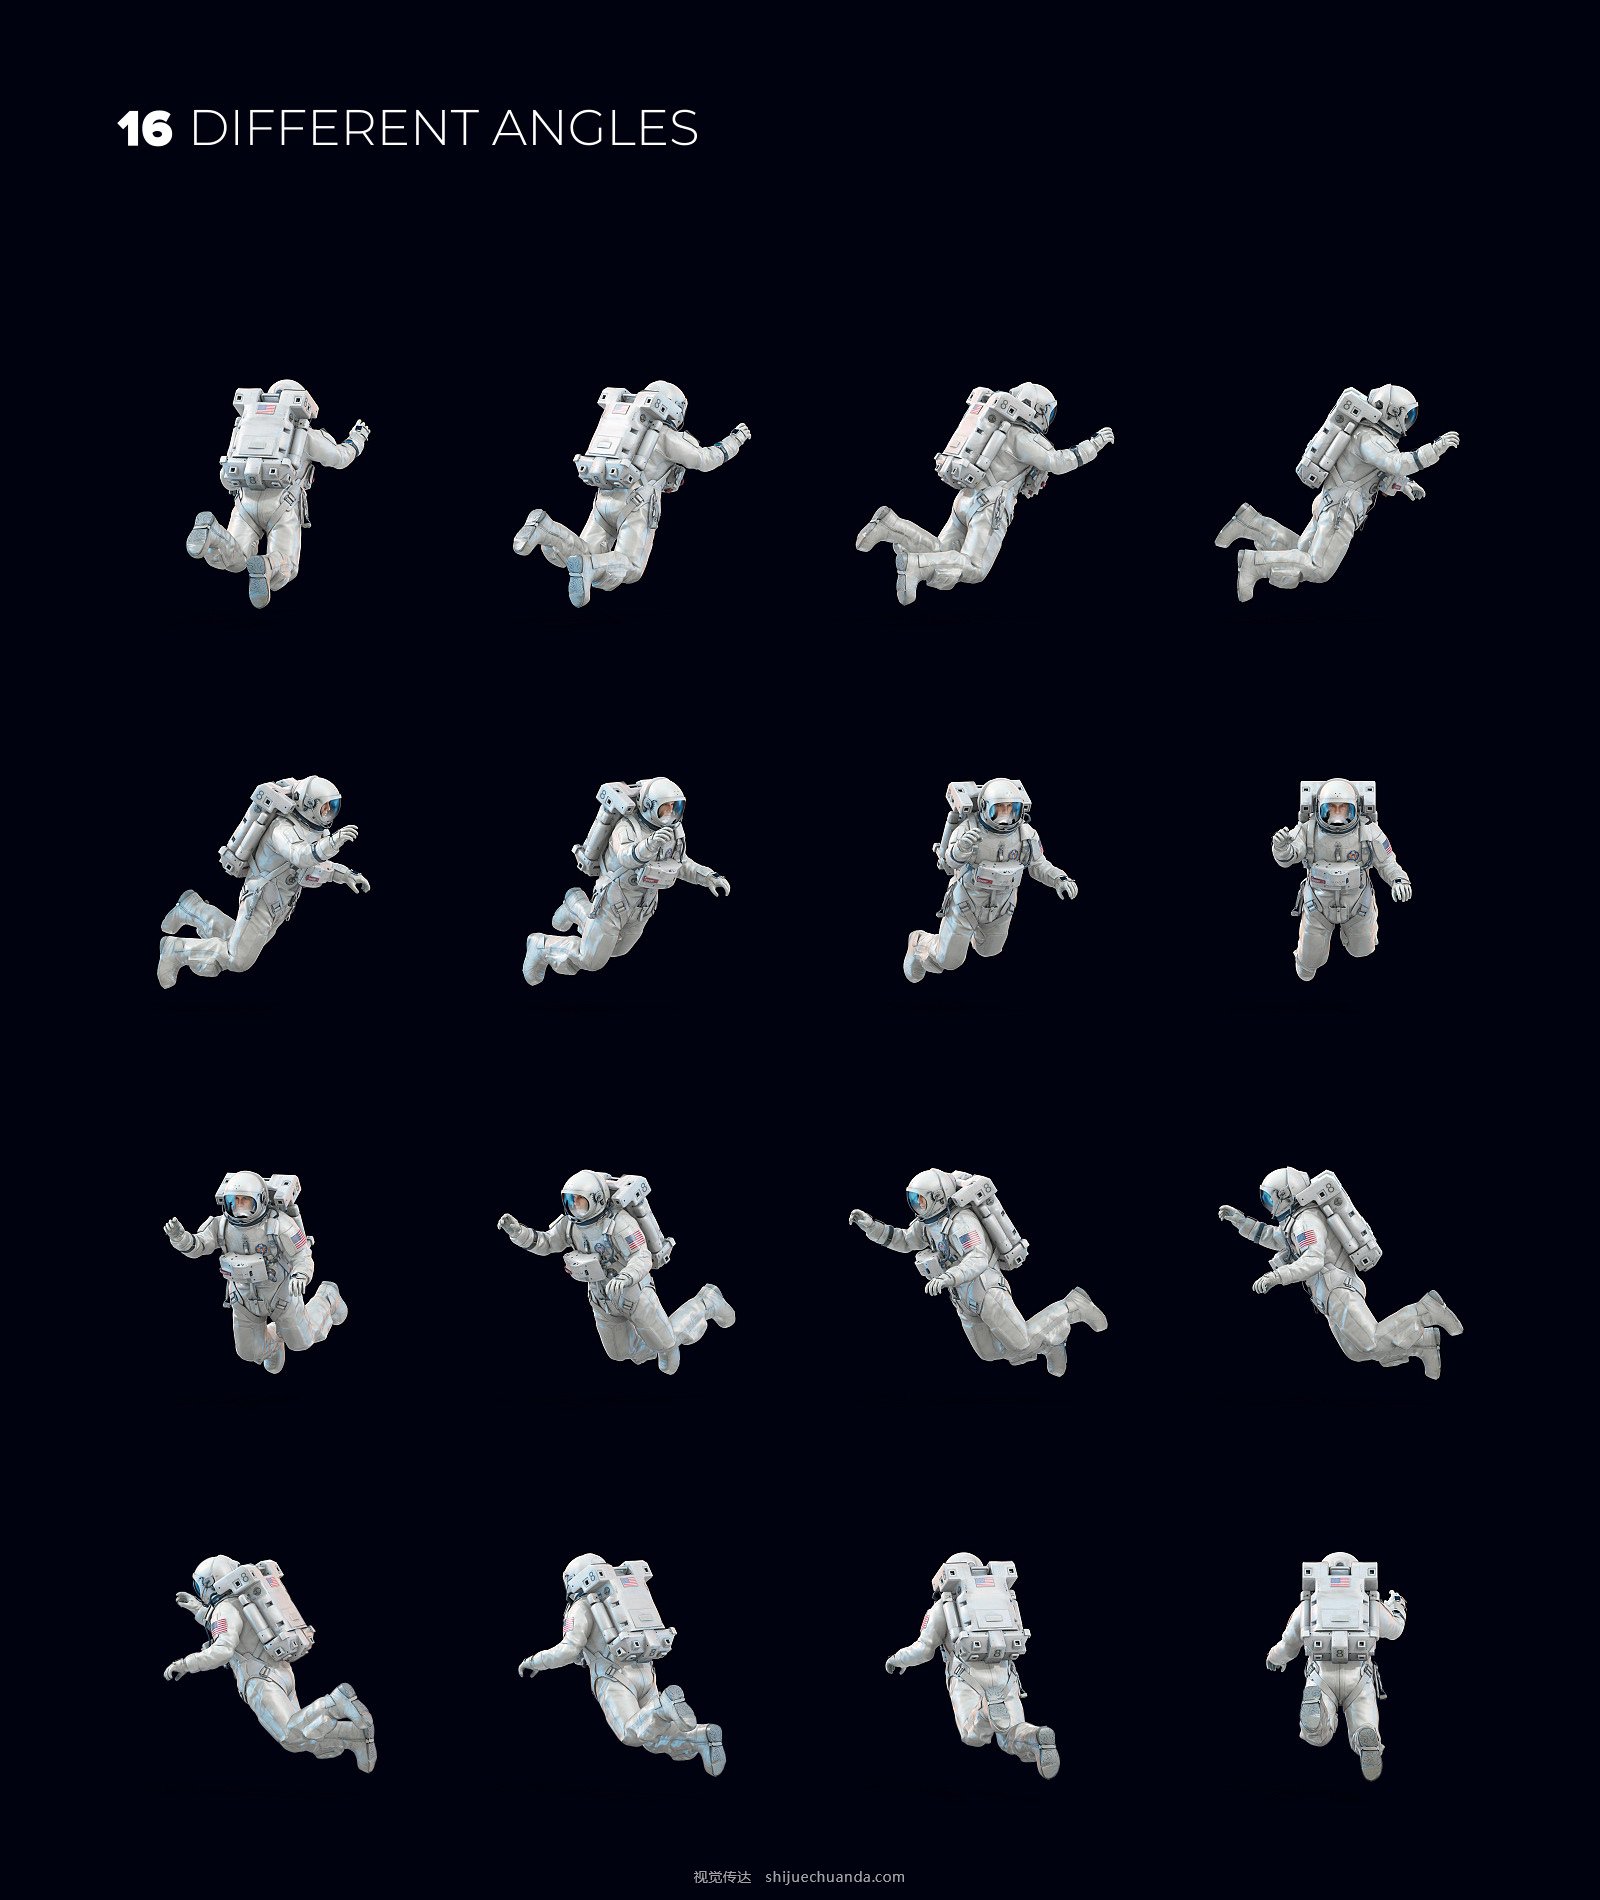 3D Mockup Space Astronaut #04-2.jpg